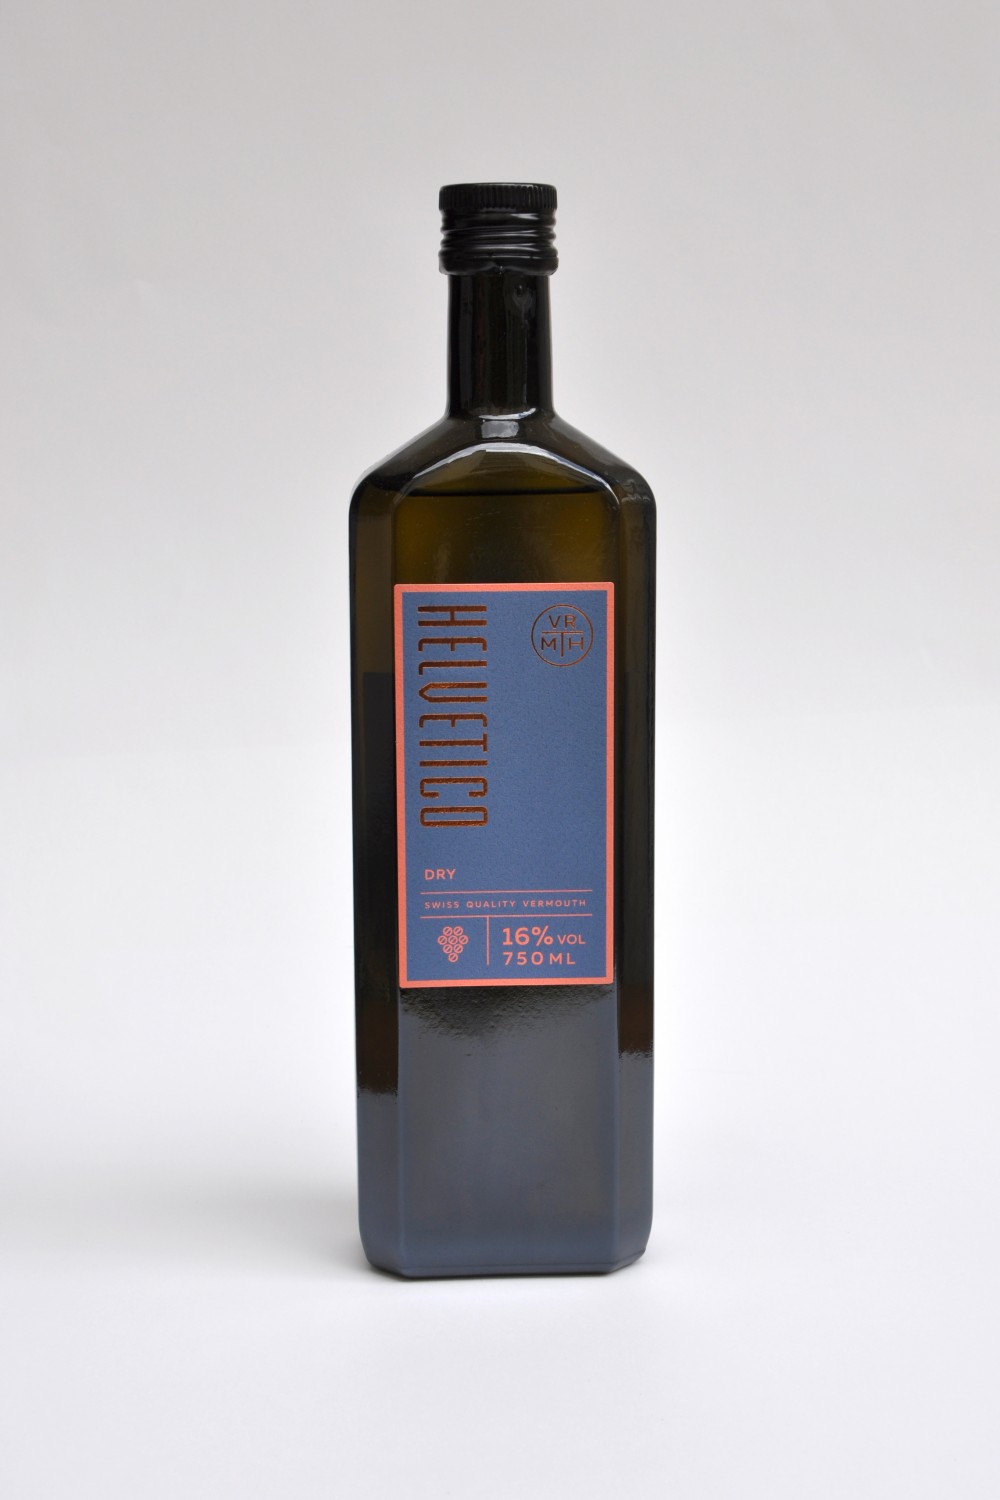 Helvetico Vermouth Dry. 